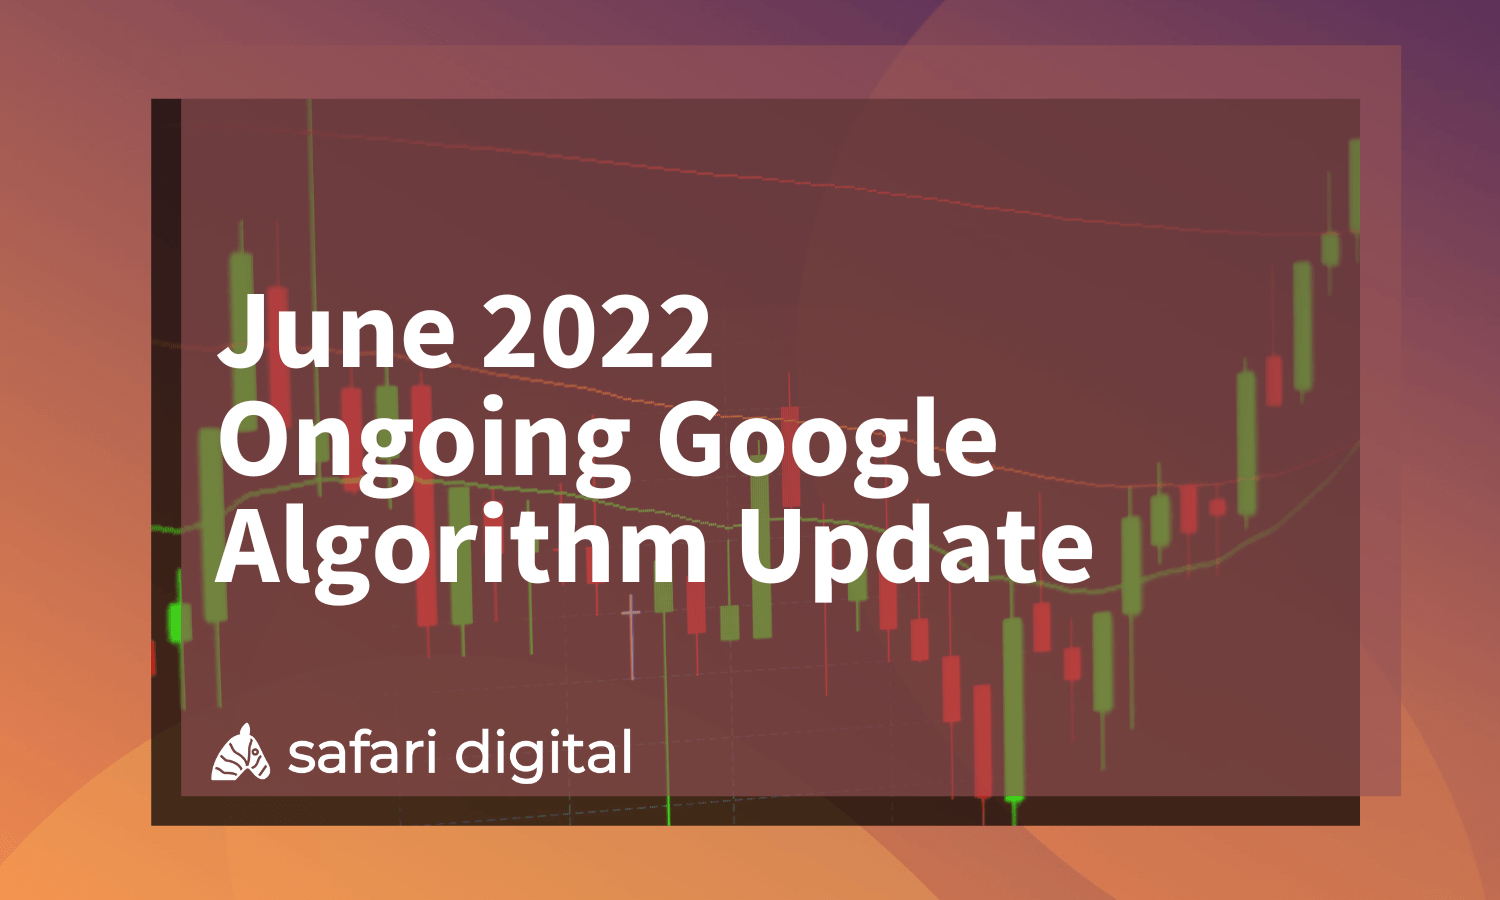 June 2022 - Ongoing Google Algorithm Update Impact